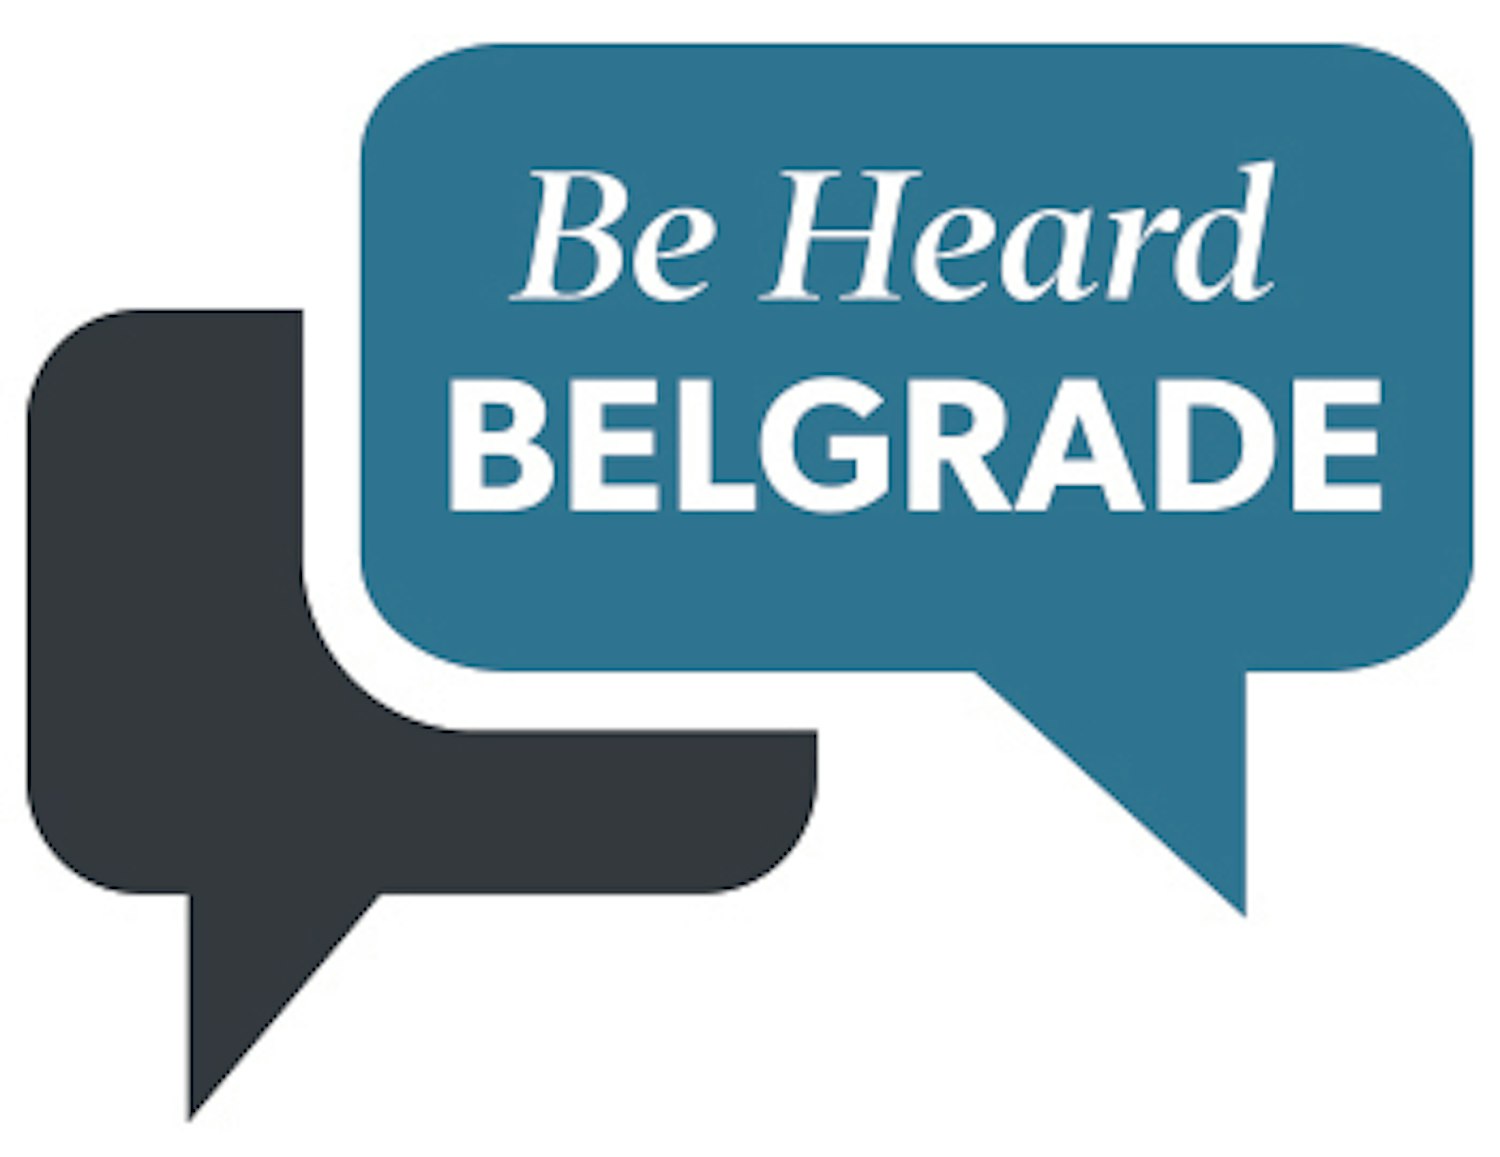 Be Heard Belgrade